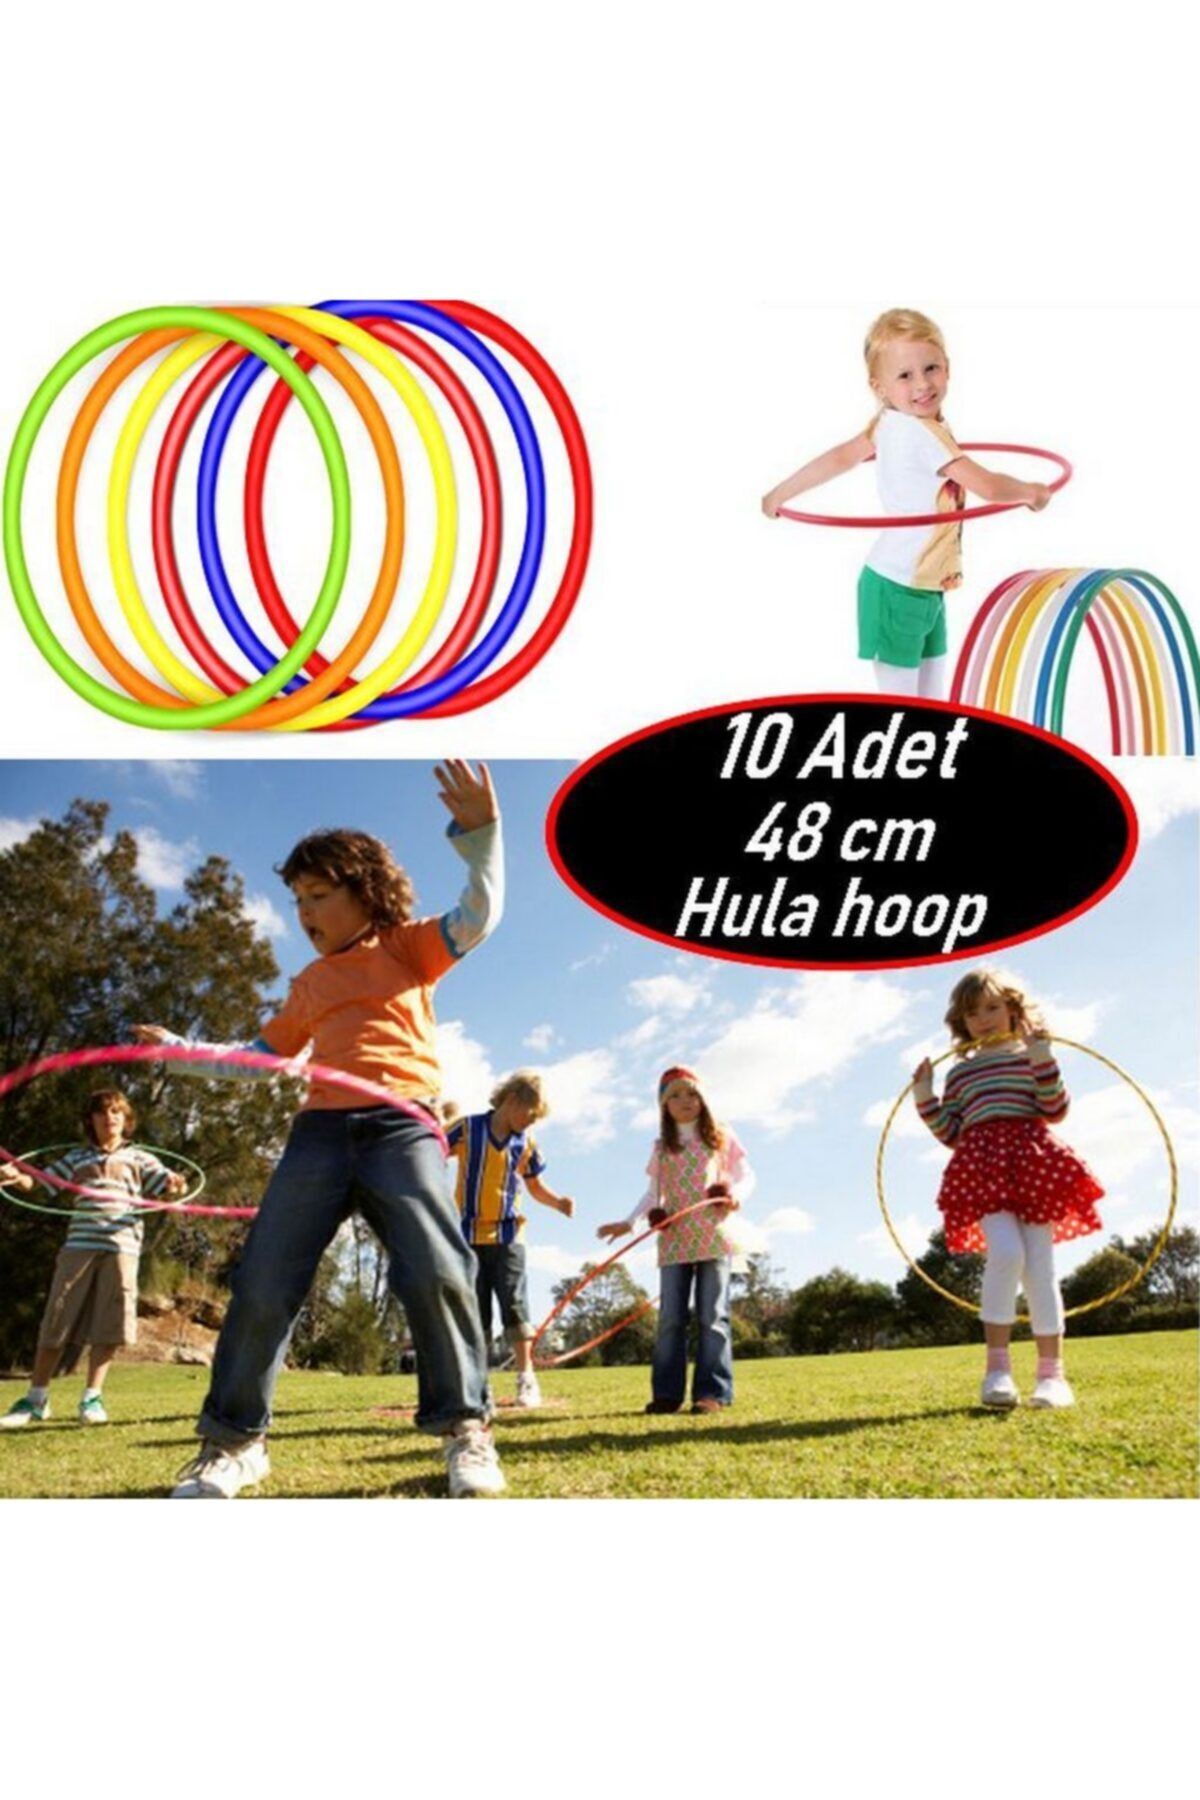 Neler Geldi Neler 10 Adet Hulahop Renkli Hula Hop 48 Cm Hulalop Çember Jimnastik Çemberi Hulohop